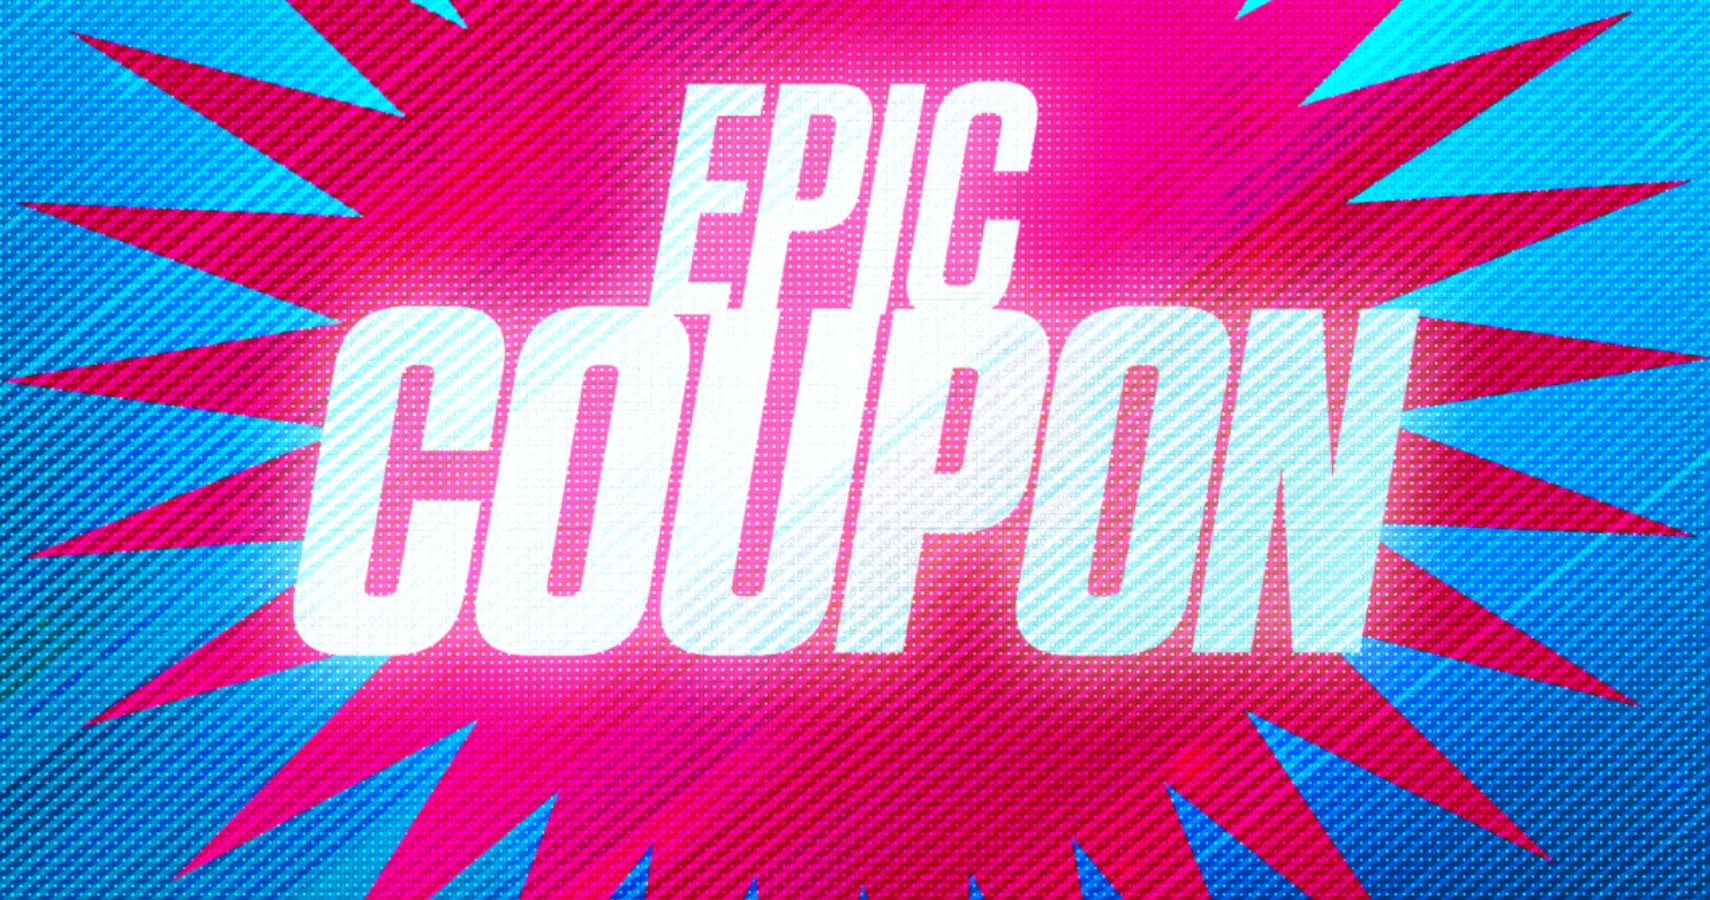 epic coupon